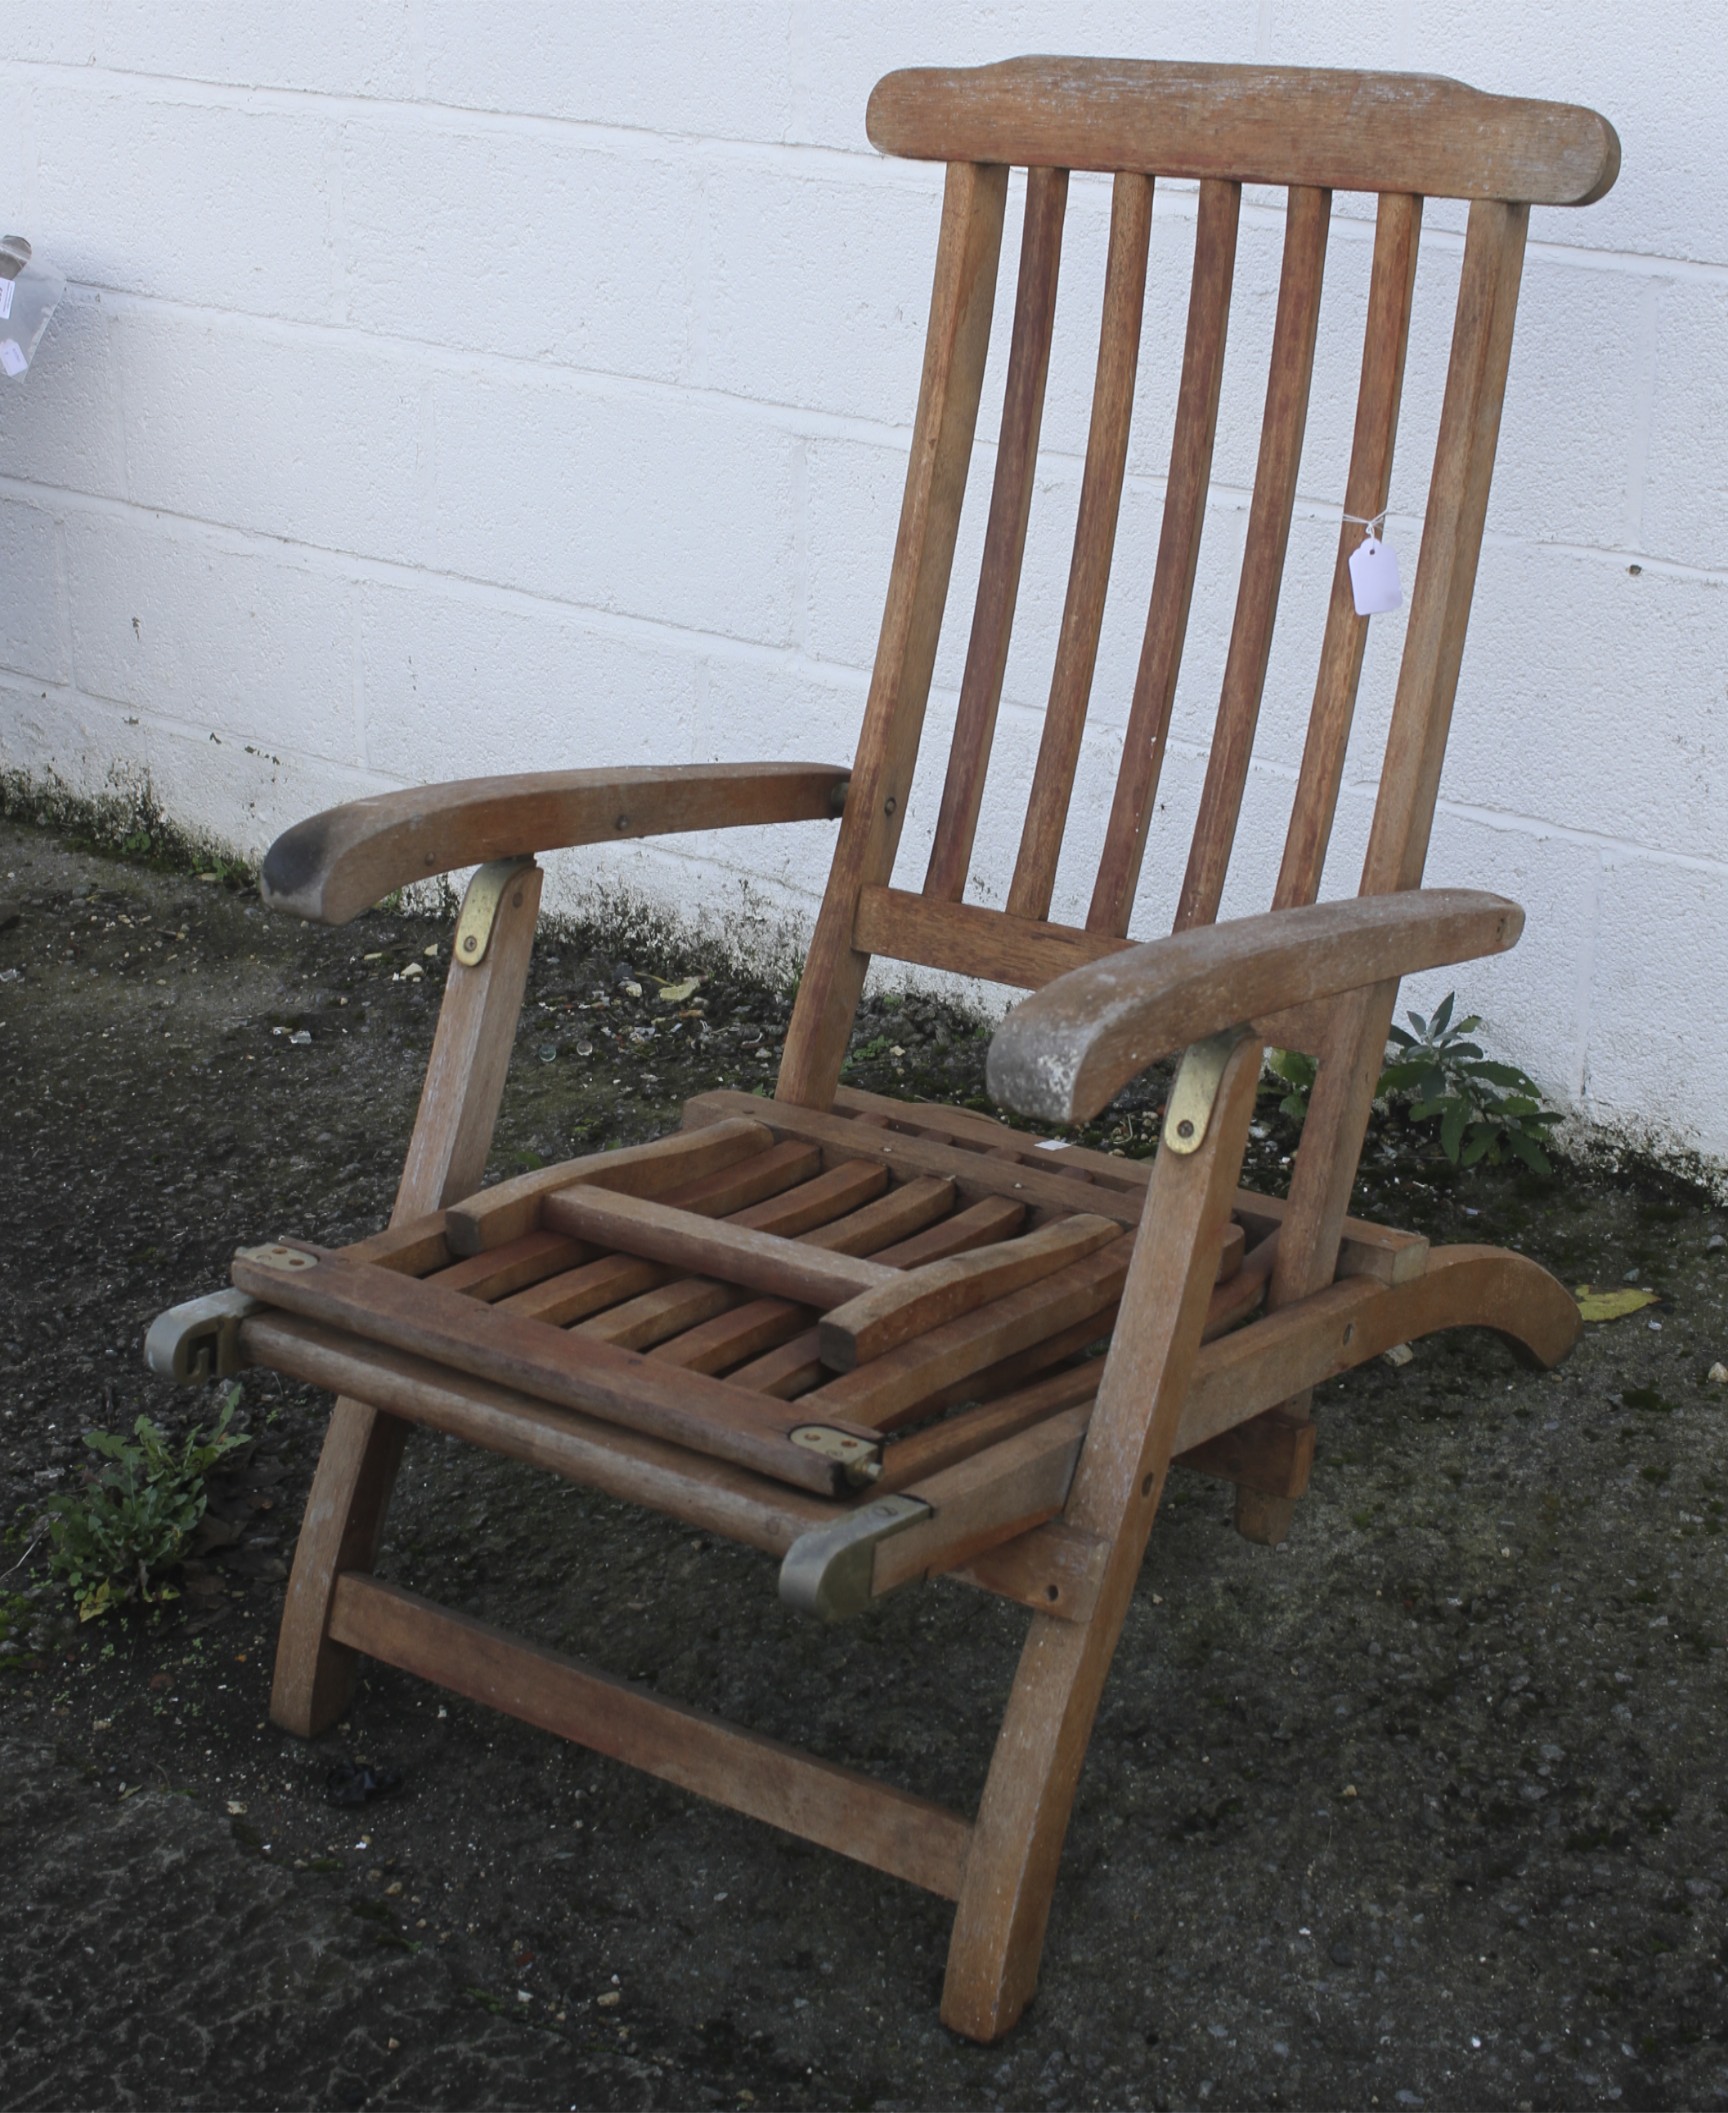 A contemporary wooden slatted garden sun chair.